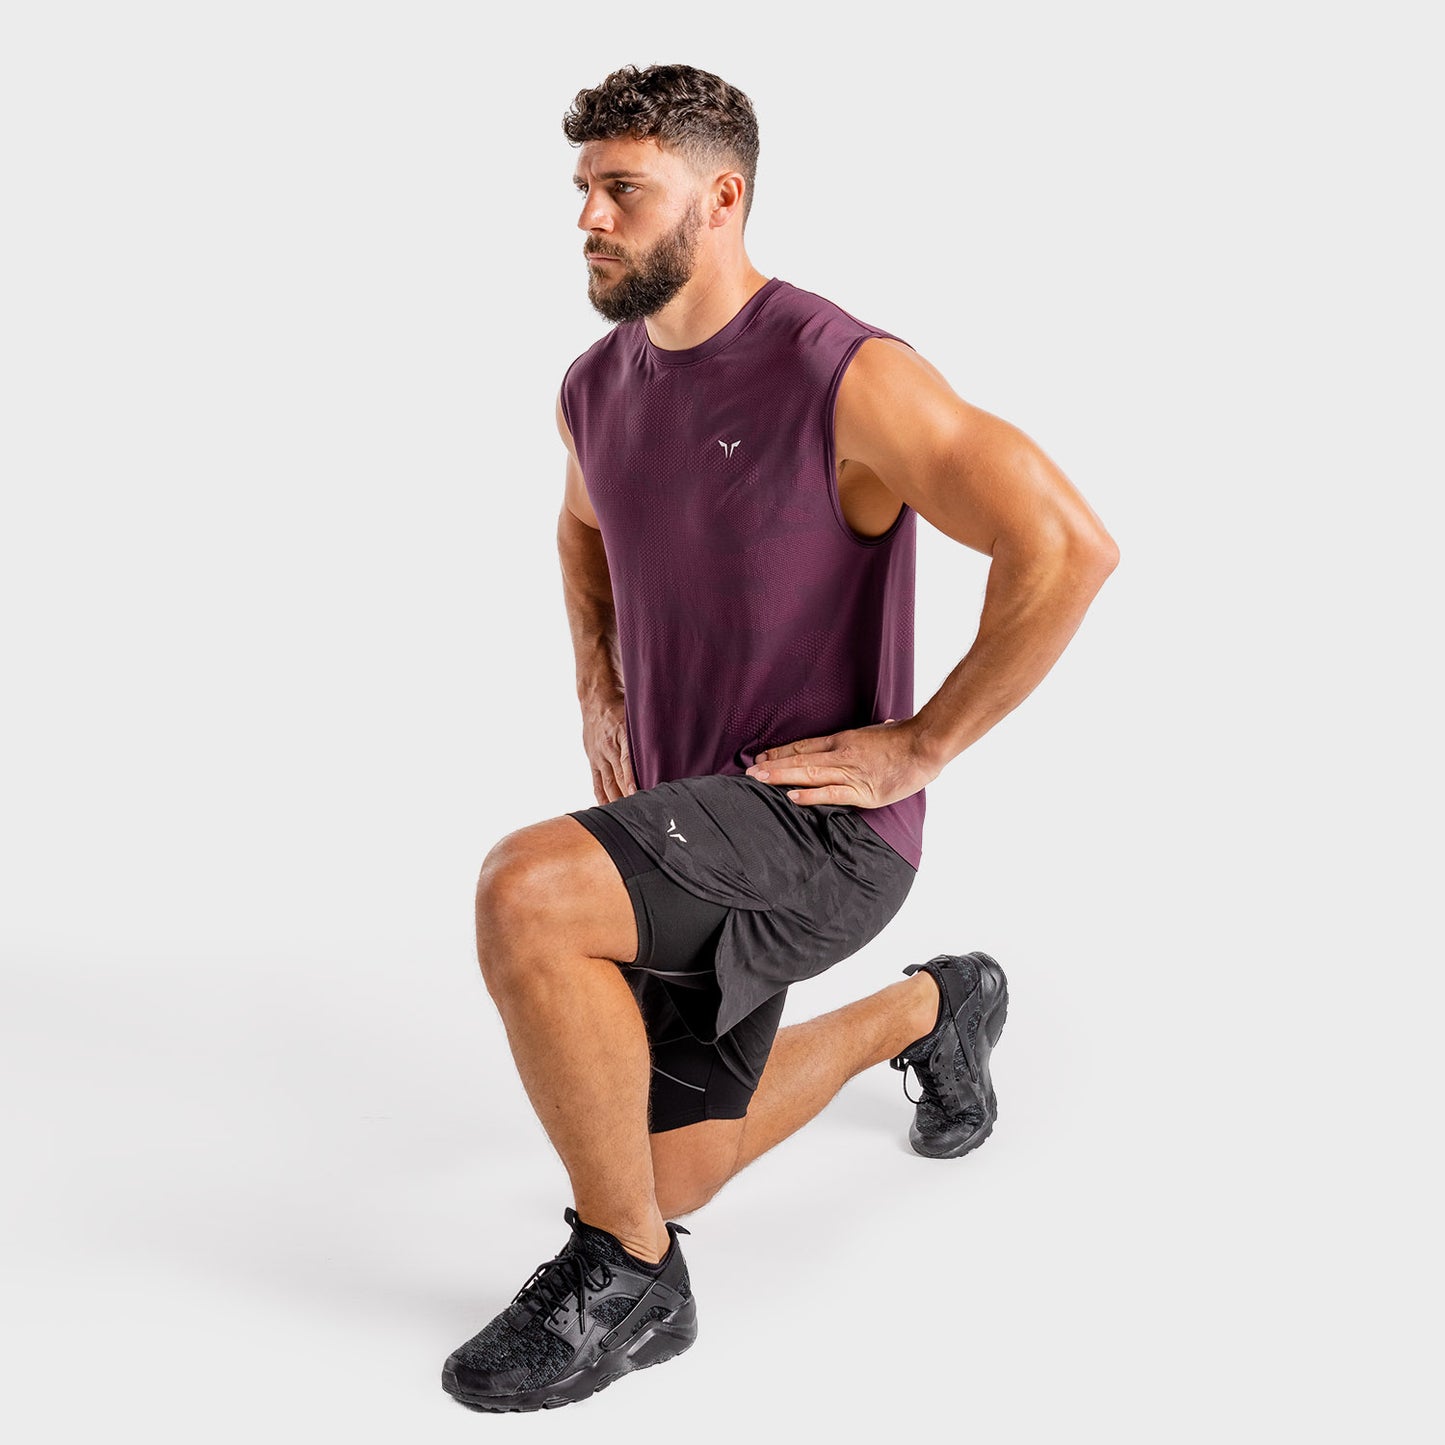 squatwolf-gym-wear-wolf-seamless-tank-purple-workout-tank-tops-for-men